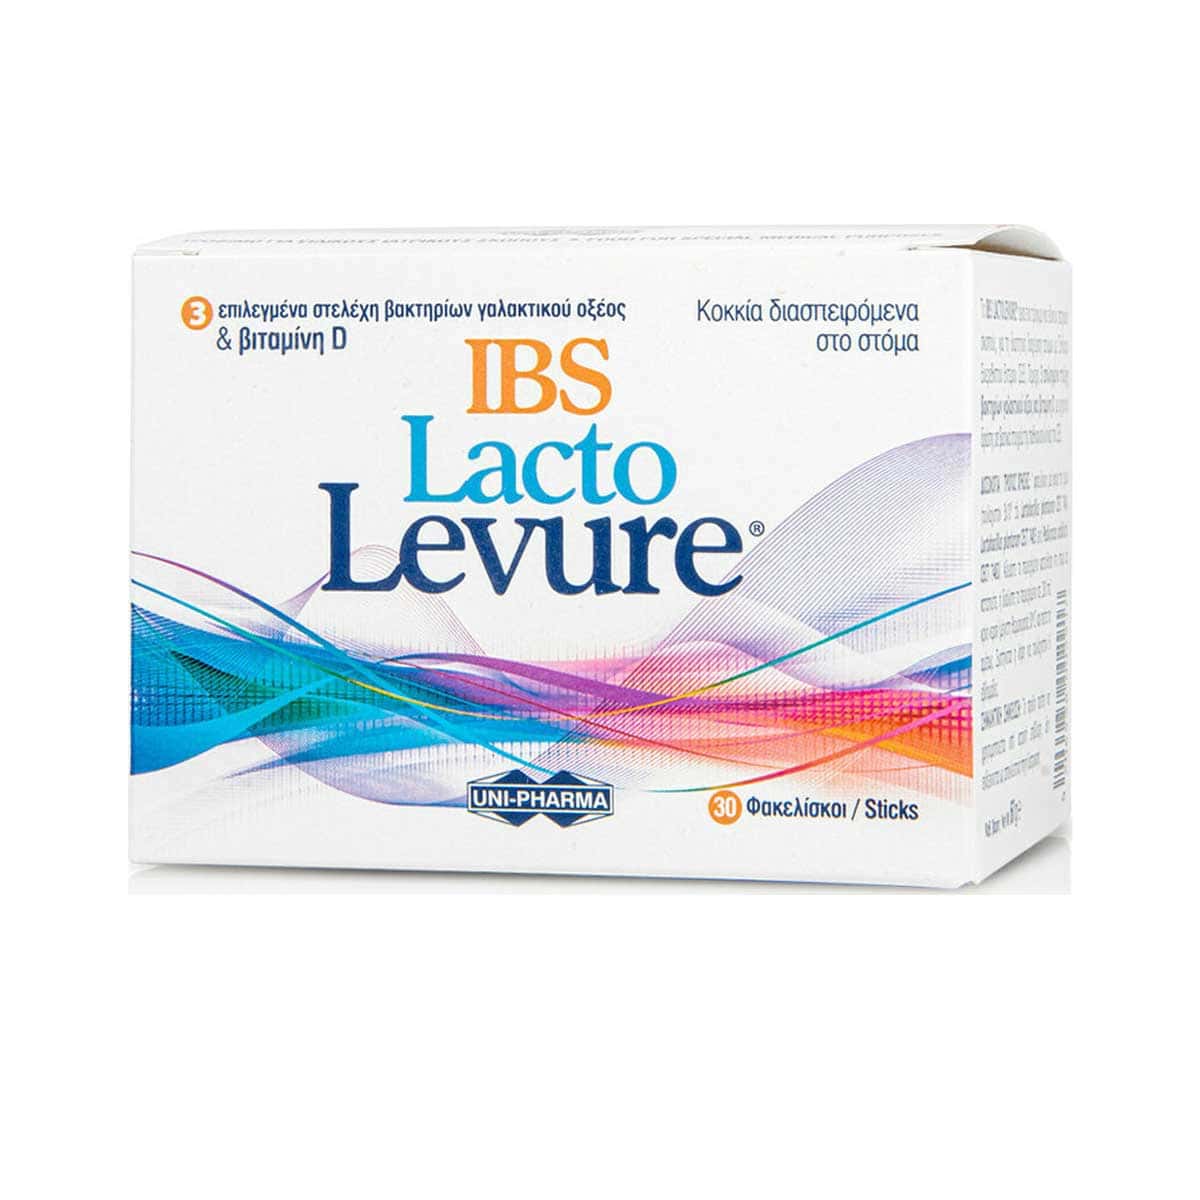 Uni-Pharma-LactoLevure-IBS-30-tmx-5206938002917